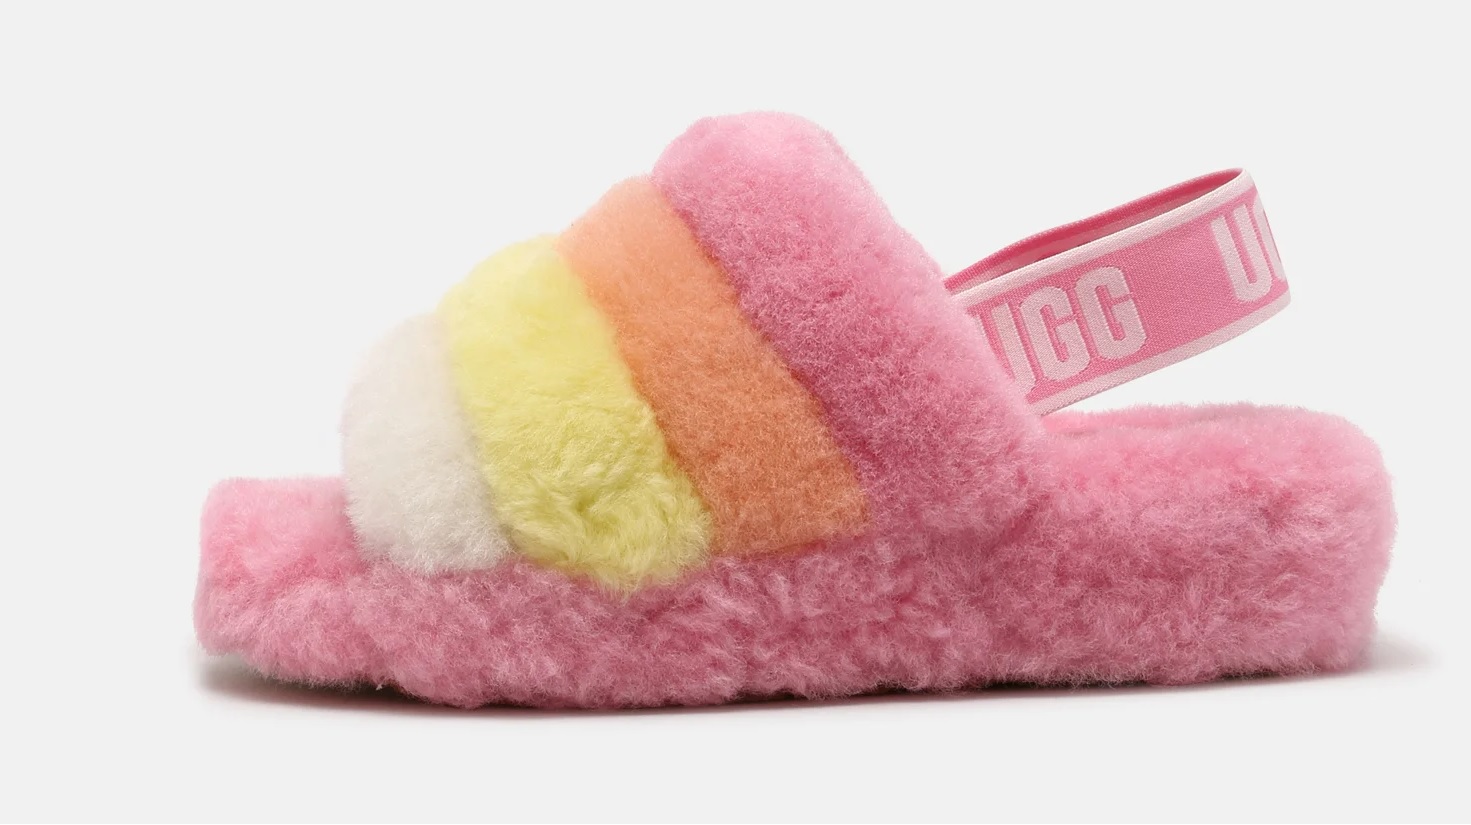 UGG Fluff Yeah flat sandals in sachet pink multi